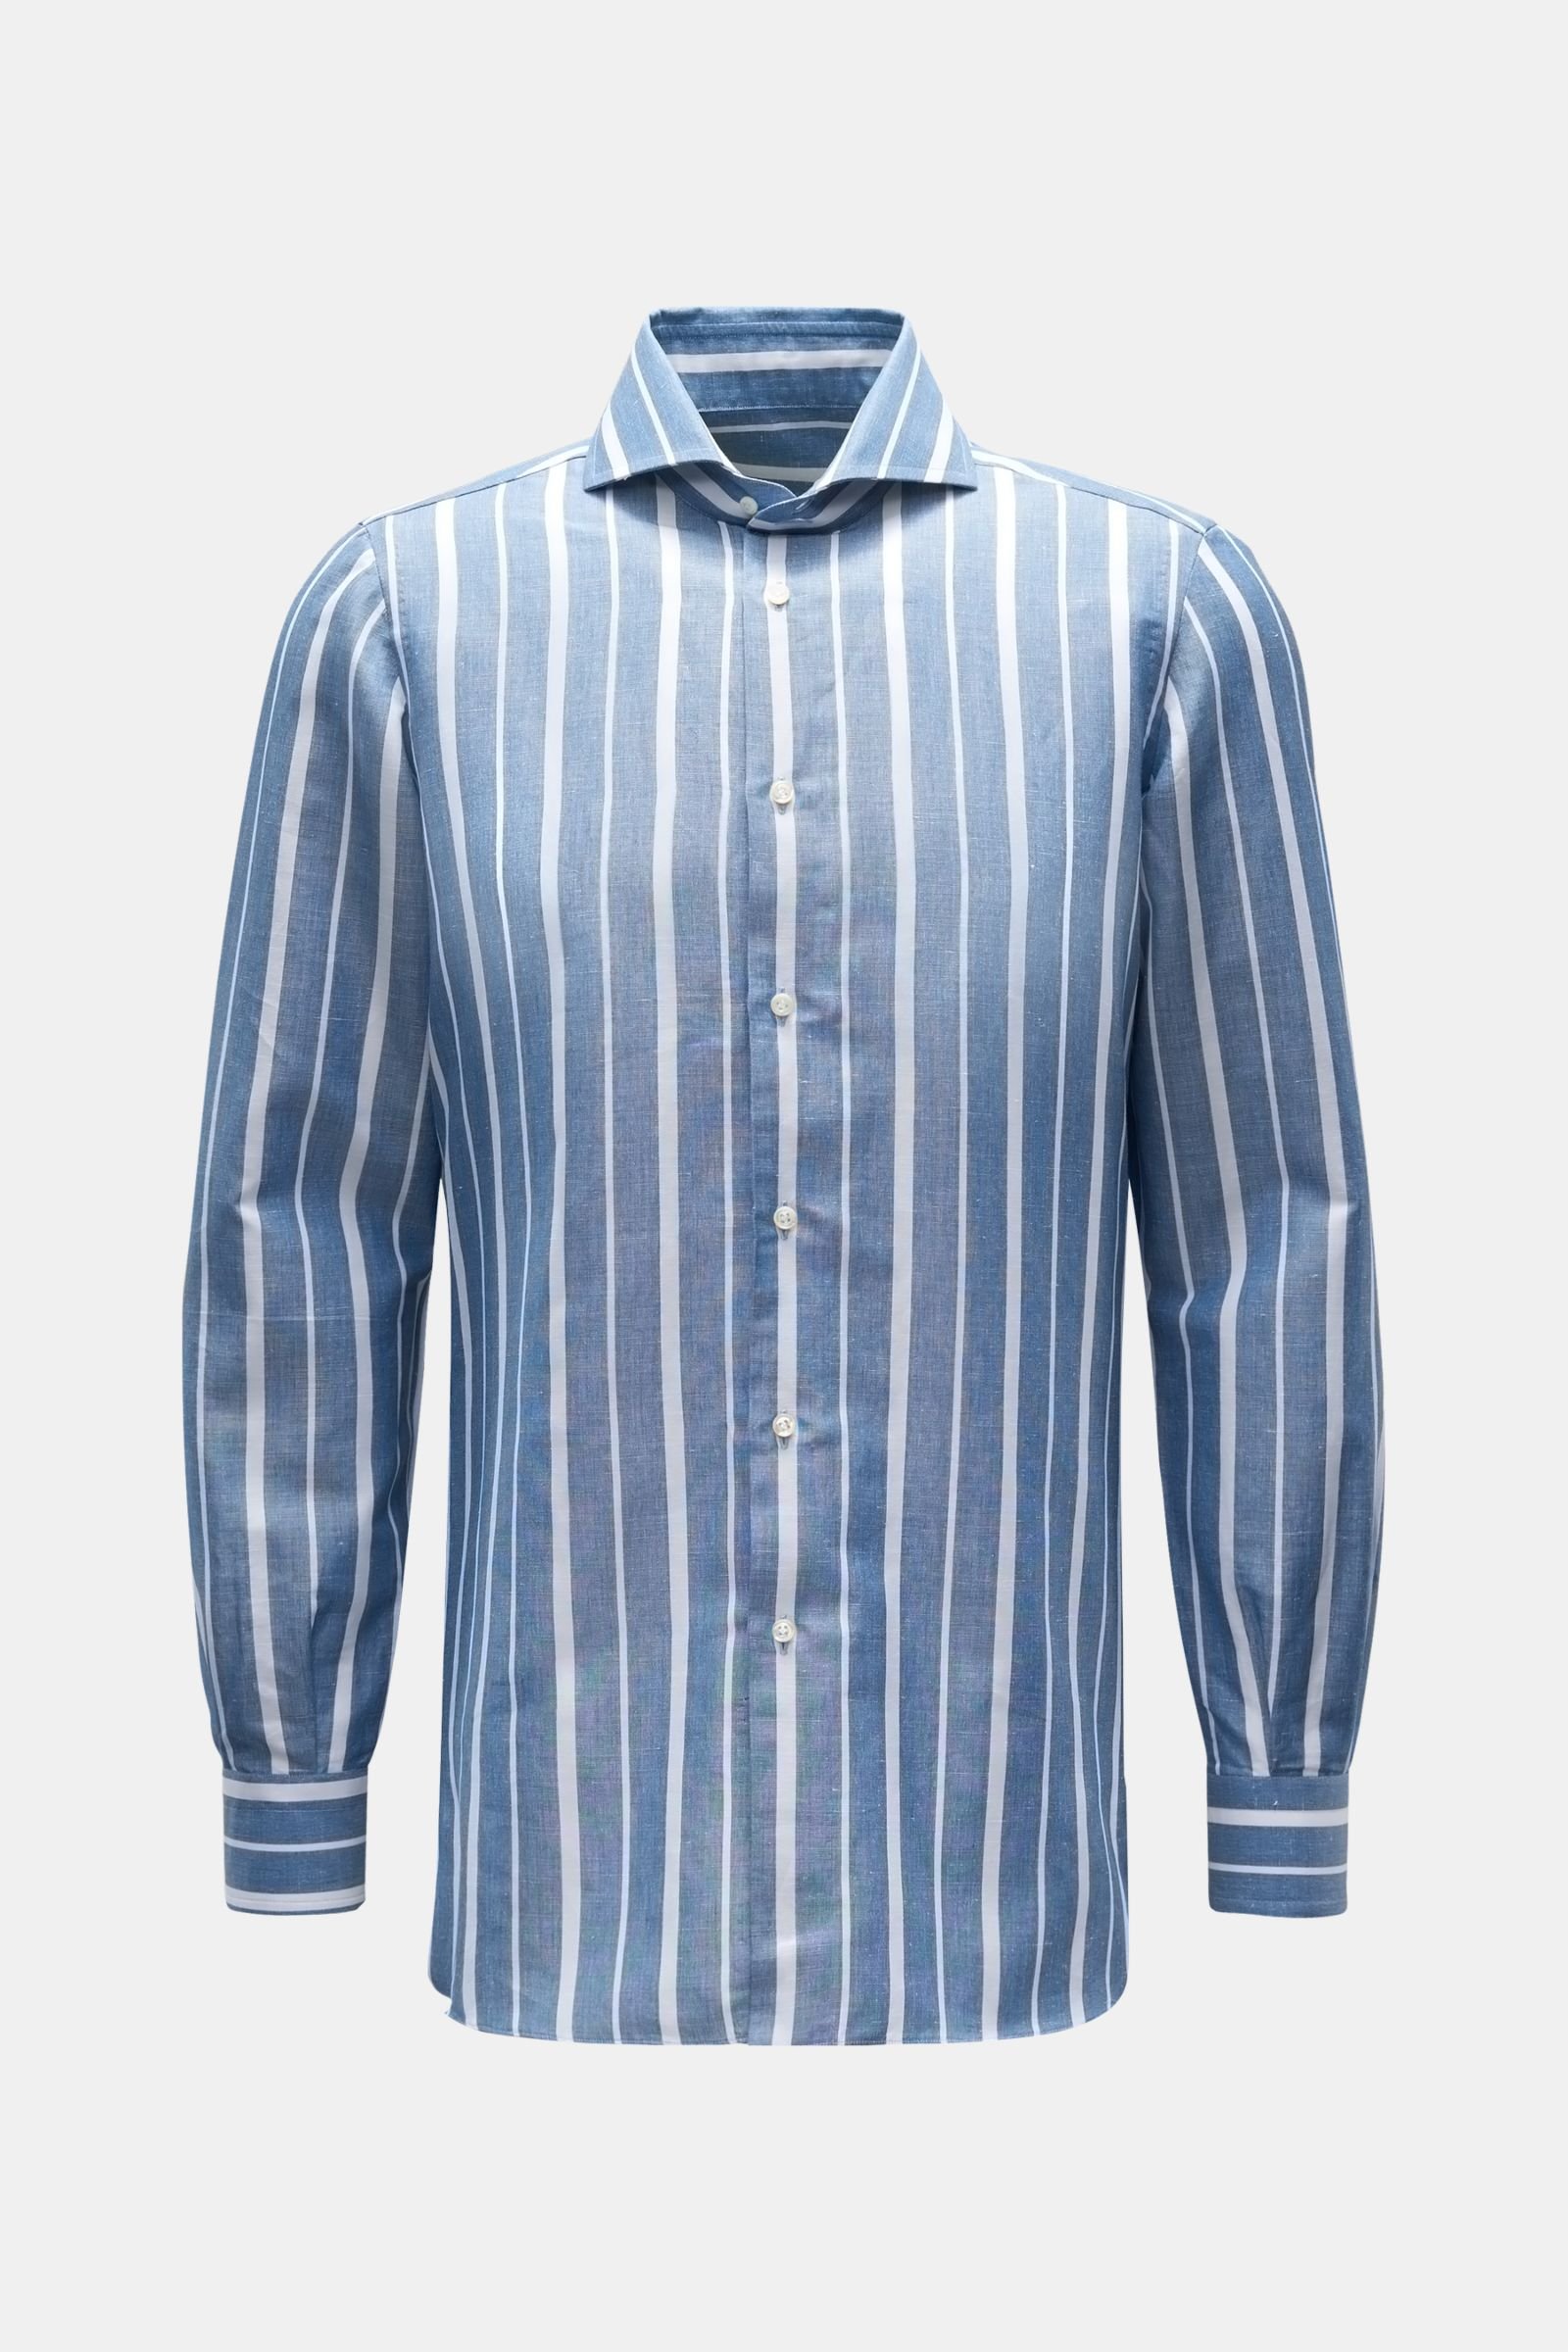 Chambray shirt 'Geppy' shark collar smoky blue/white striped 